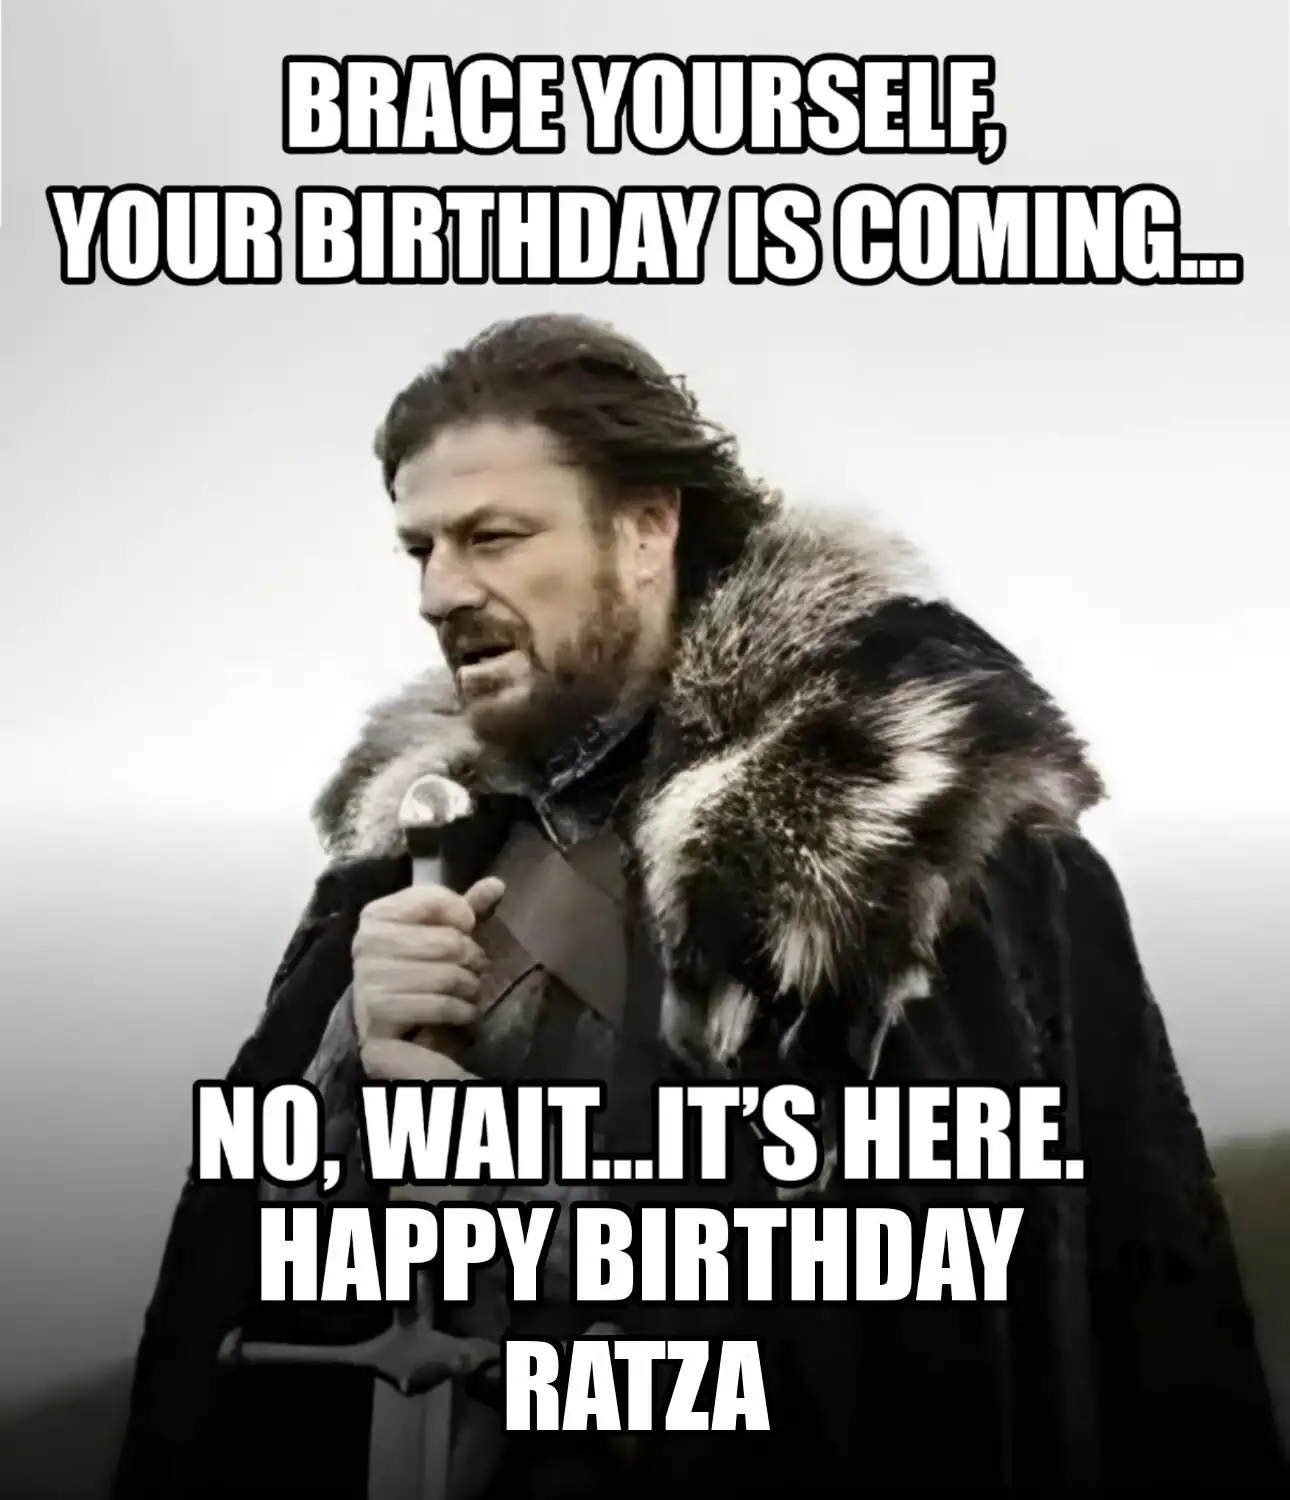 Happy Birthday Ratza Brace Yourself Your Birthday Is Coming Meme